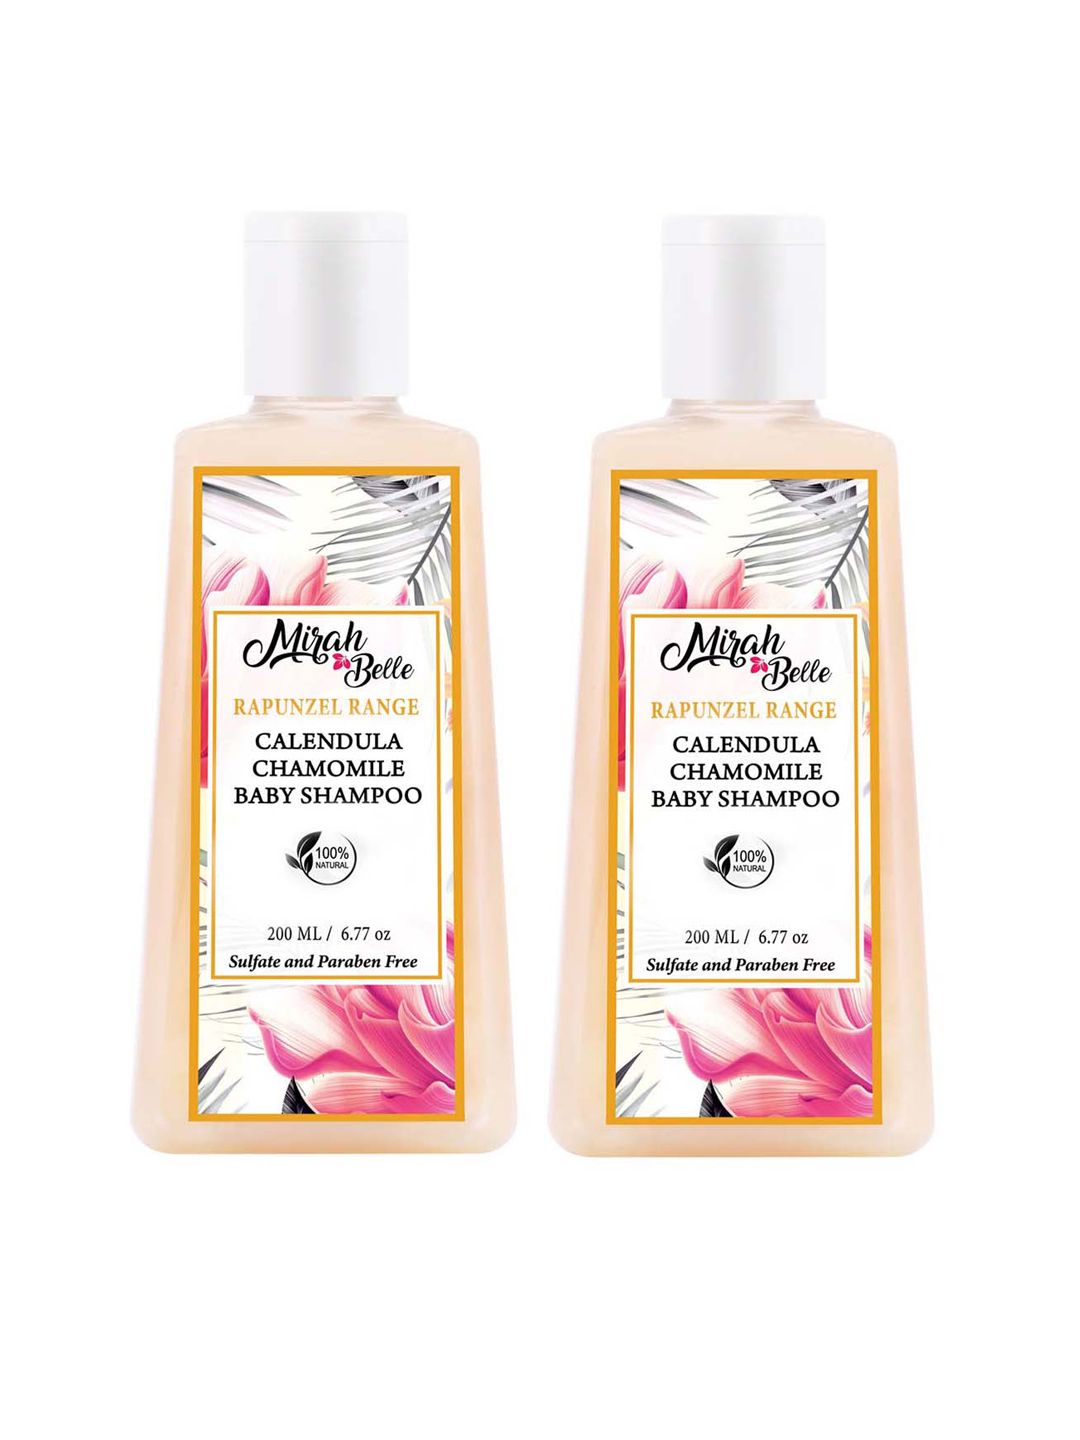 Mirah Belle Set of 2 Calendula - Chamomile Baby Shampoo 400 ml Price in India